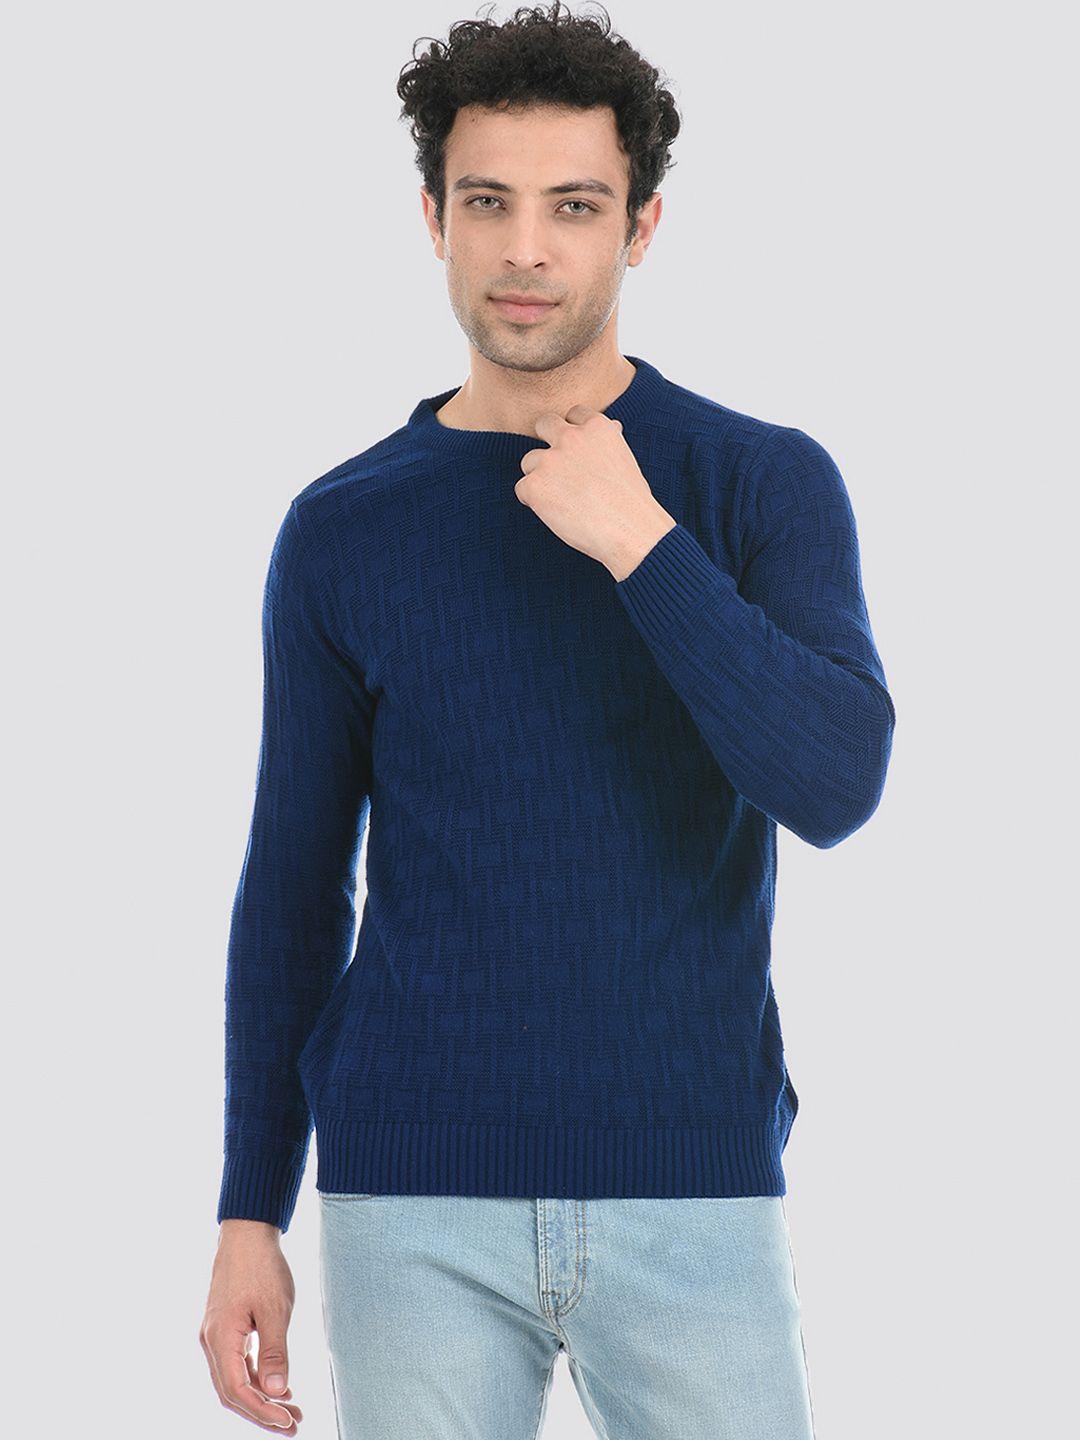 cloak & decker by monte carlo men blue & black acrylic pullover sweater